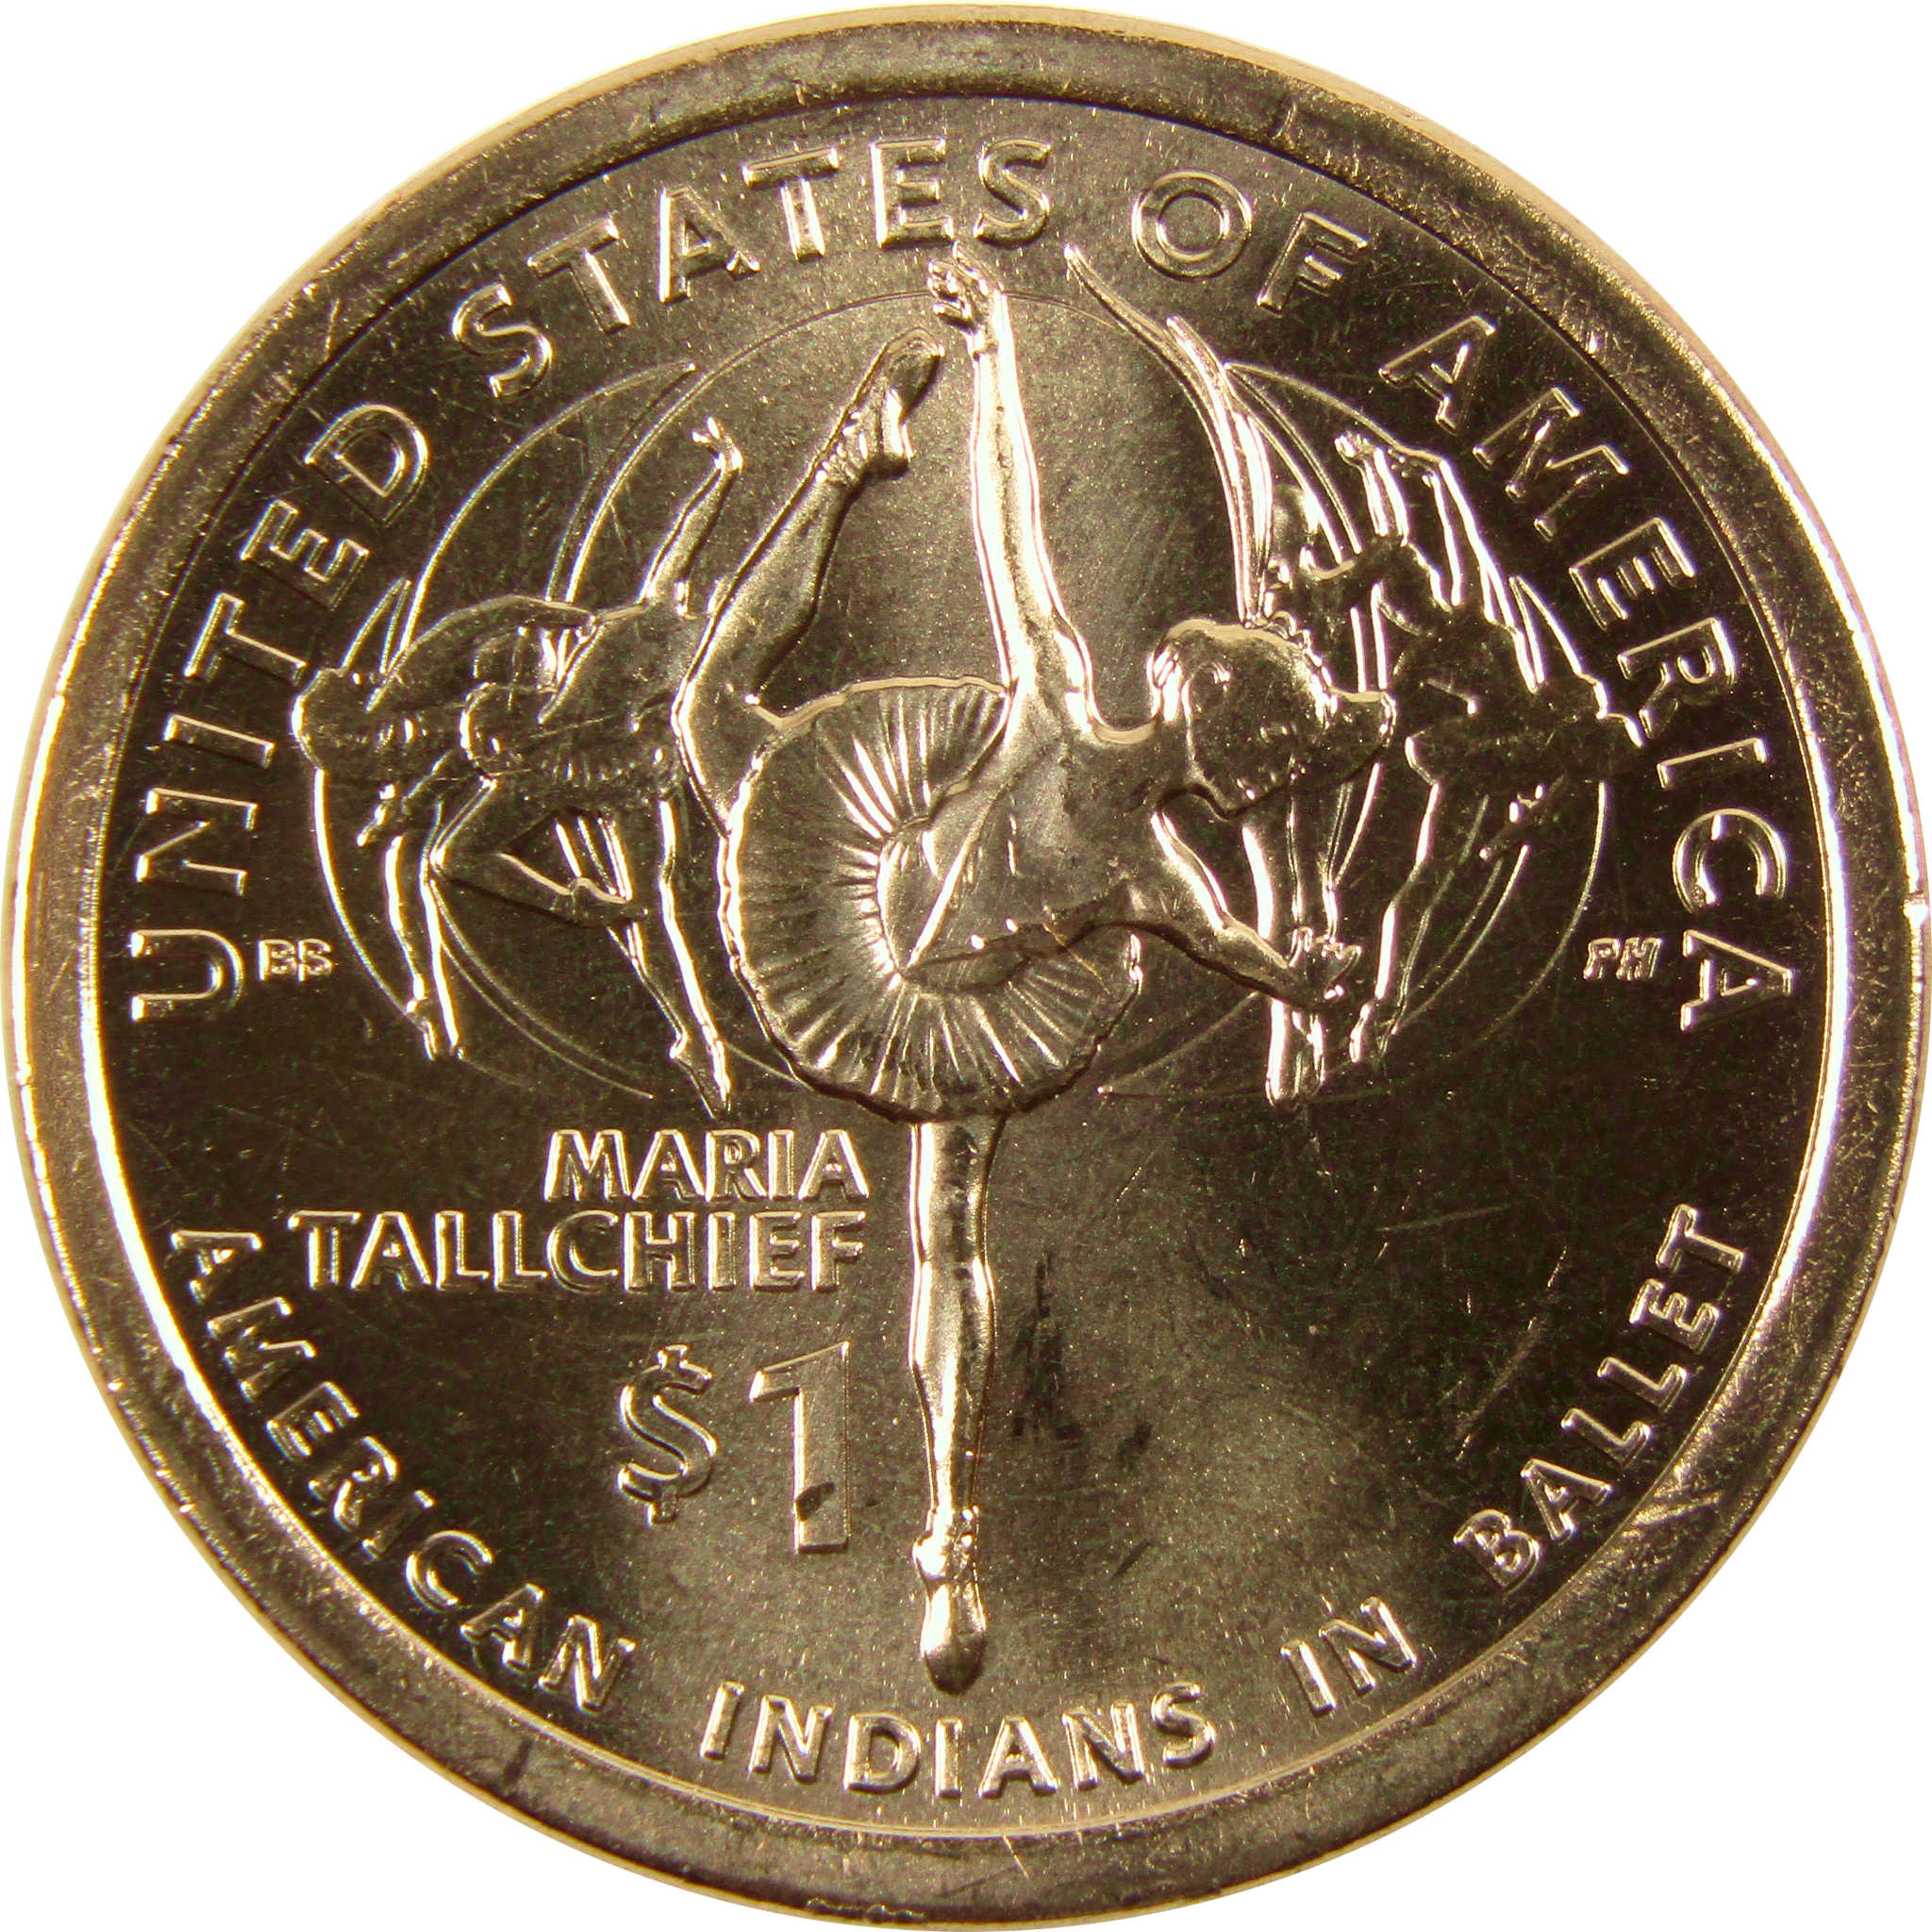 2023 P Maria Tallchief Native American Dollar BU Uncirculated $1 Coin